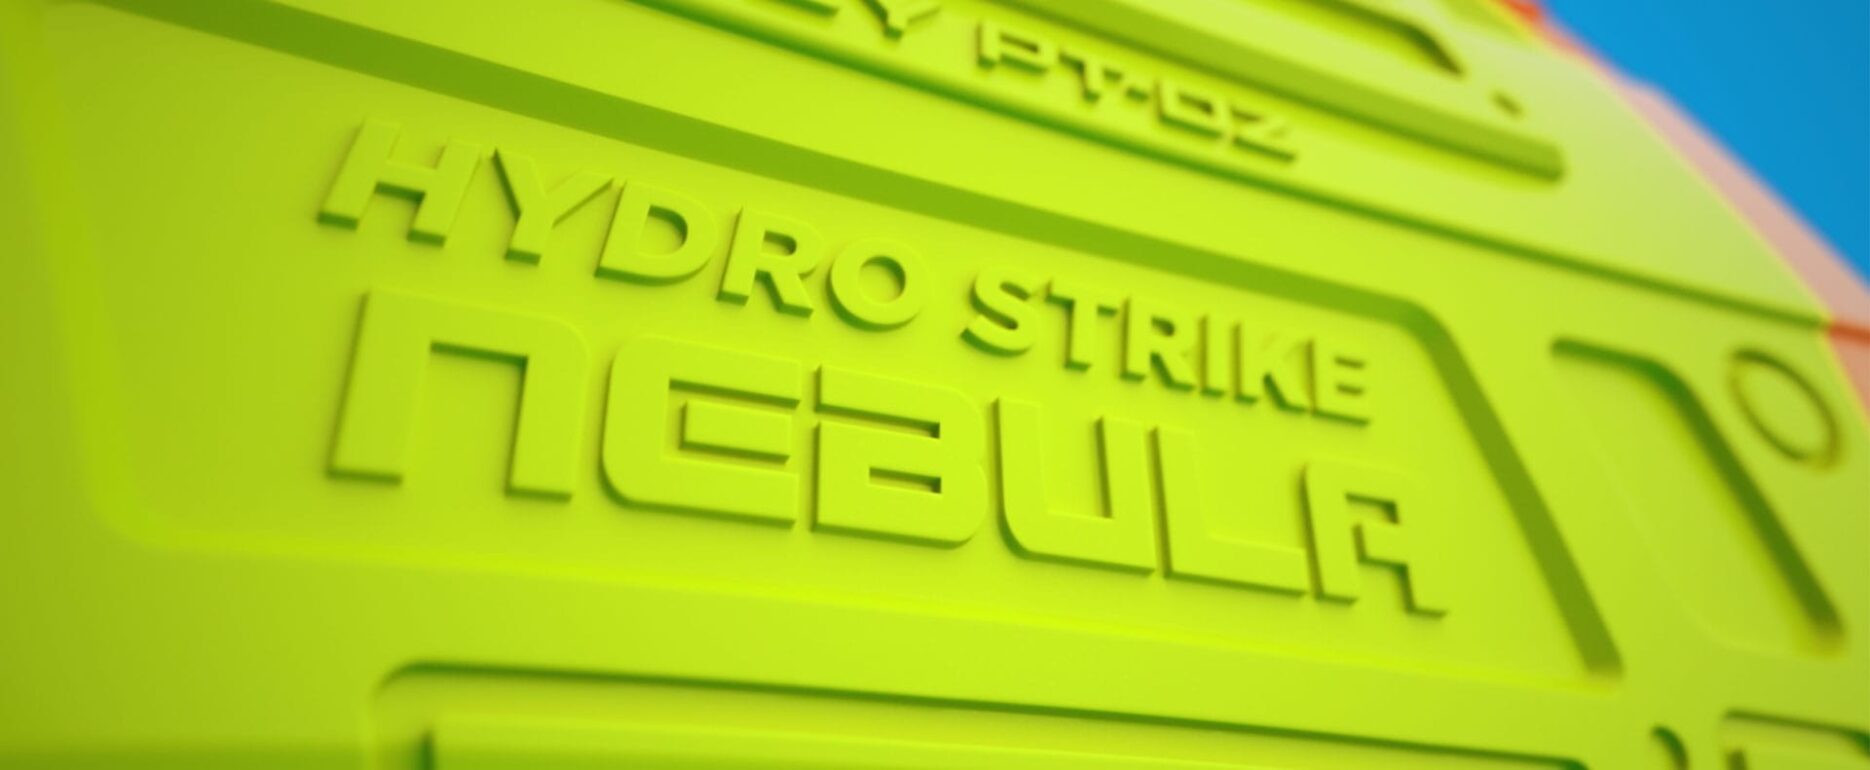 Hydro Strike Gel Bead Blasters Nebula Pro Closeup Badge For Video Preview